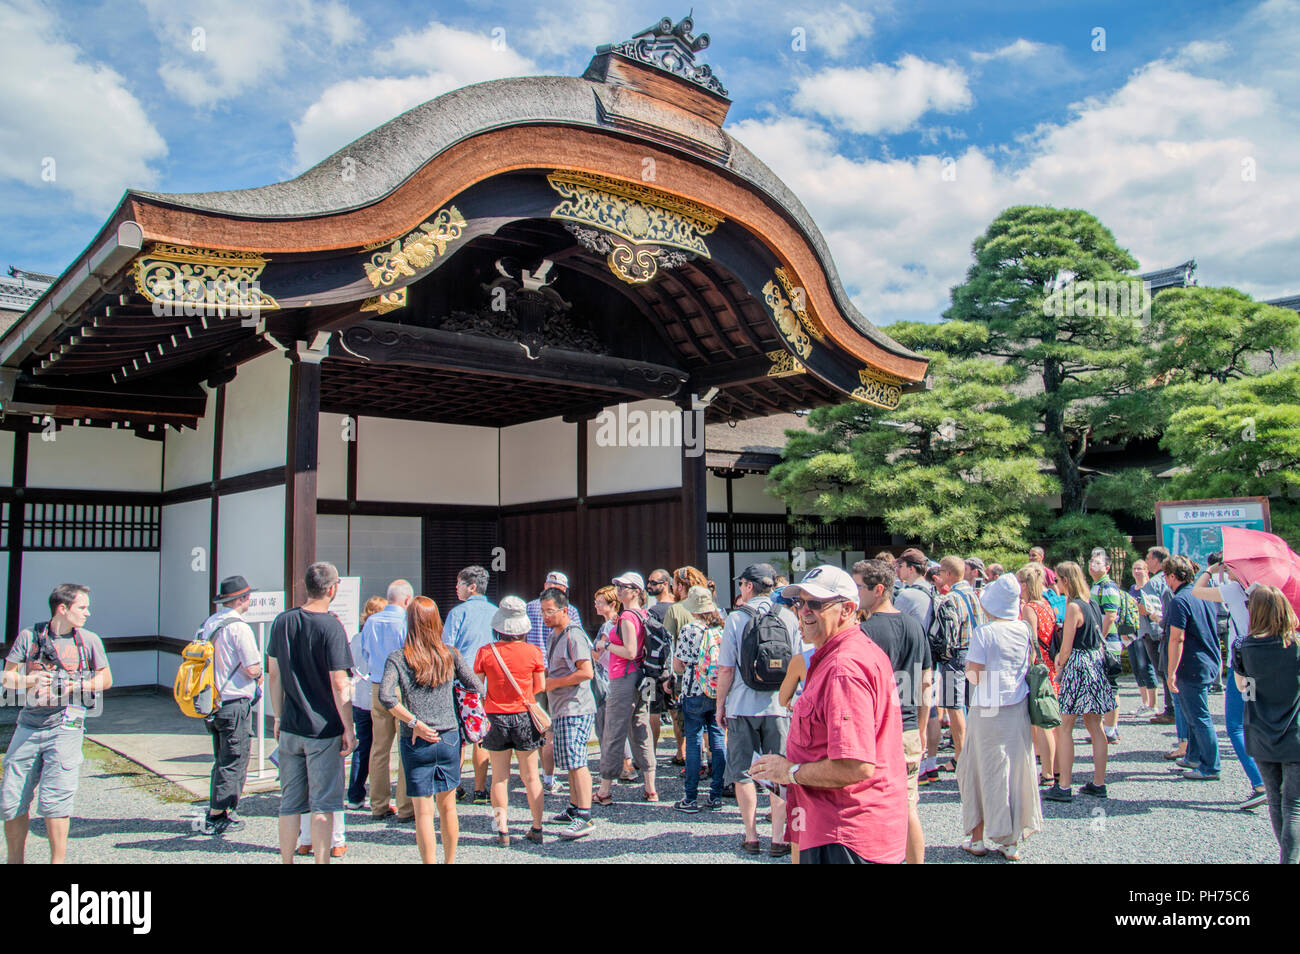 The Sento Imperial Palace At Kyoto Japan 2015 Stock Photo